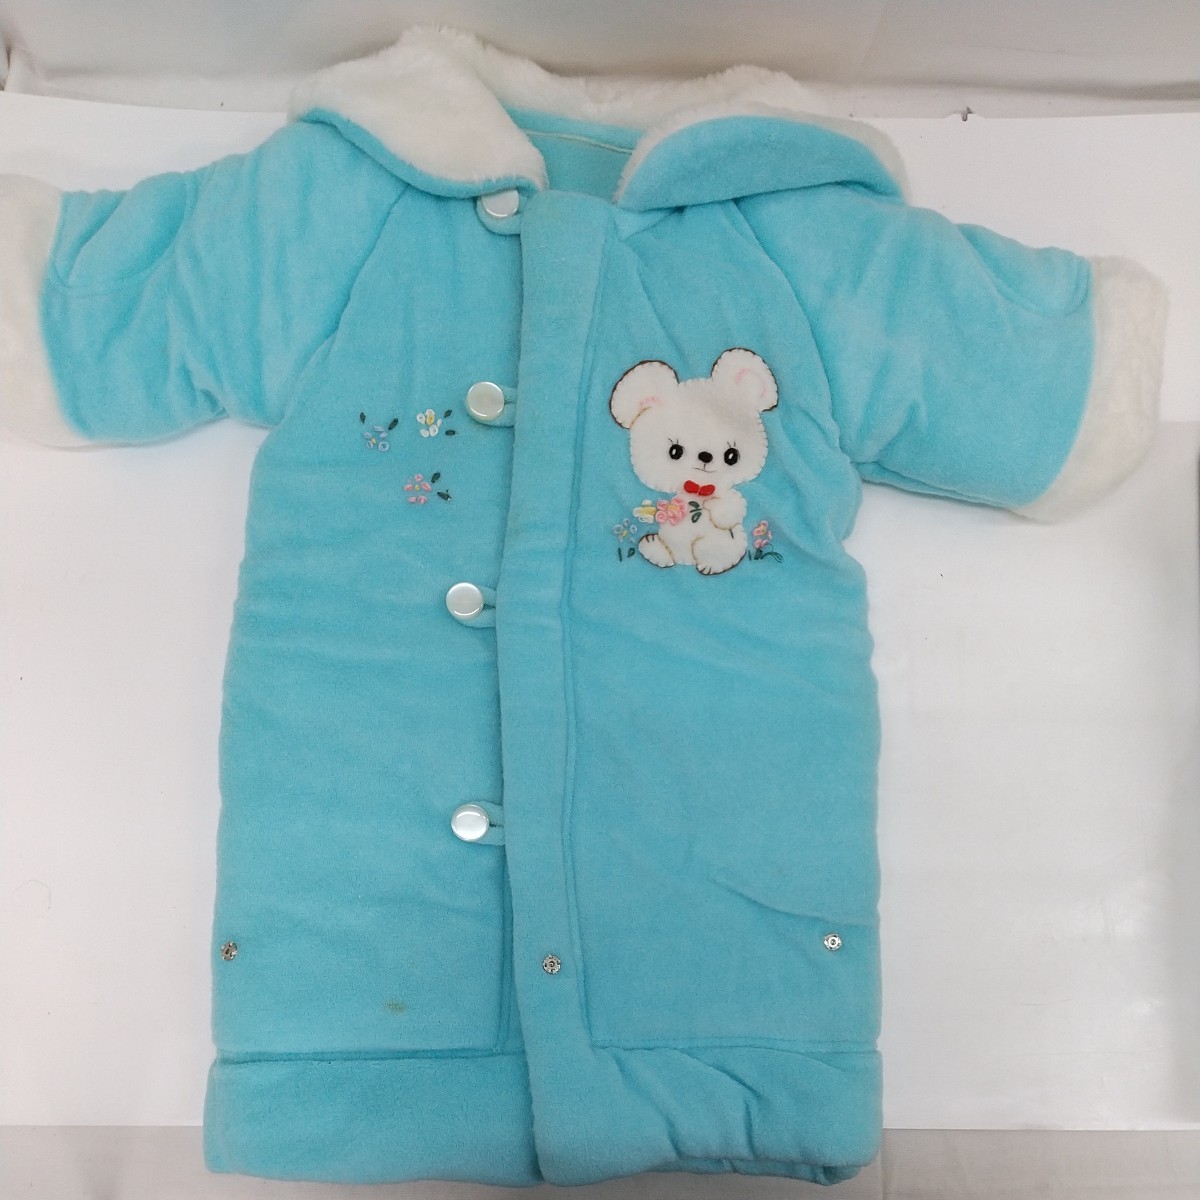 287 100 jpy start! Showa Retro blanket. like baby clothes Baby Wear baby wear .. san box attaching N738815 light blue 